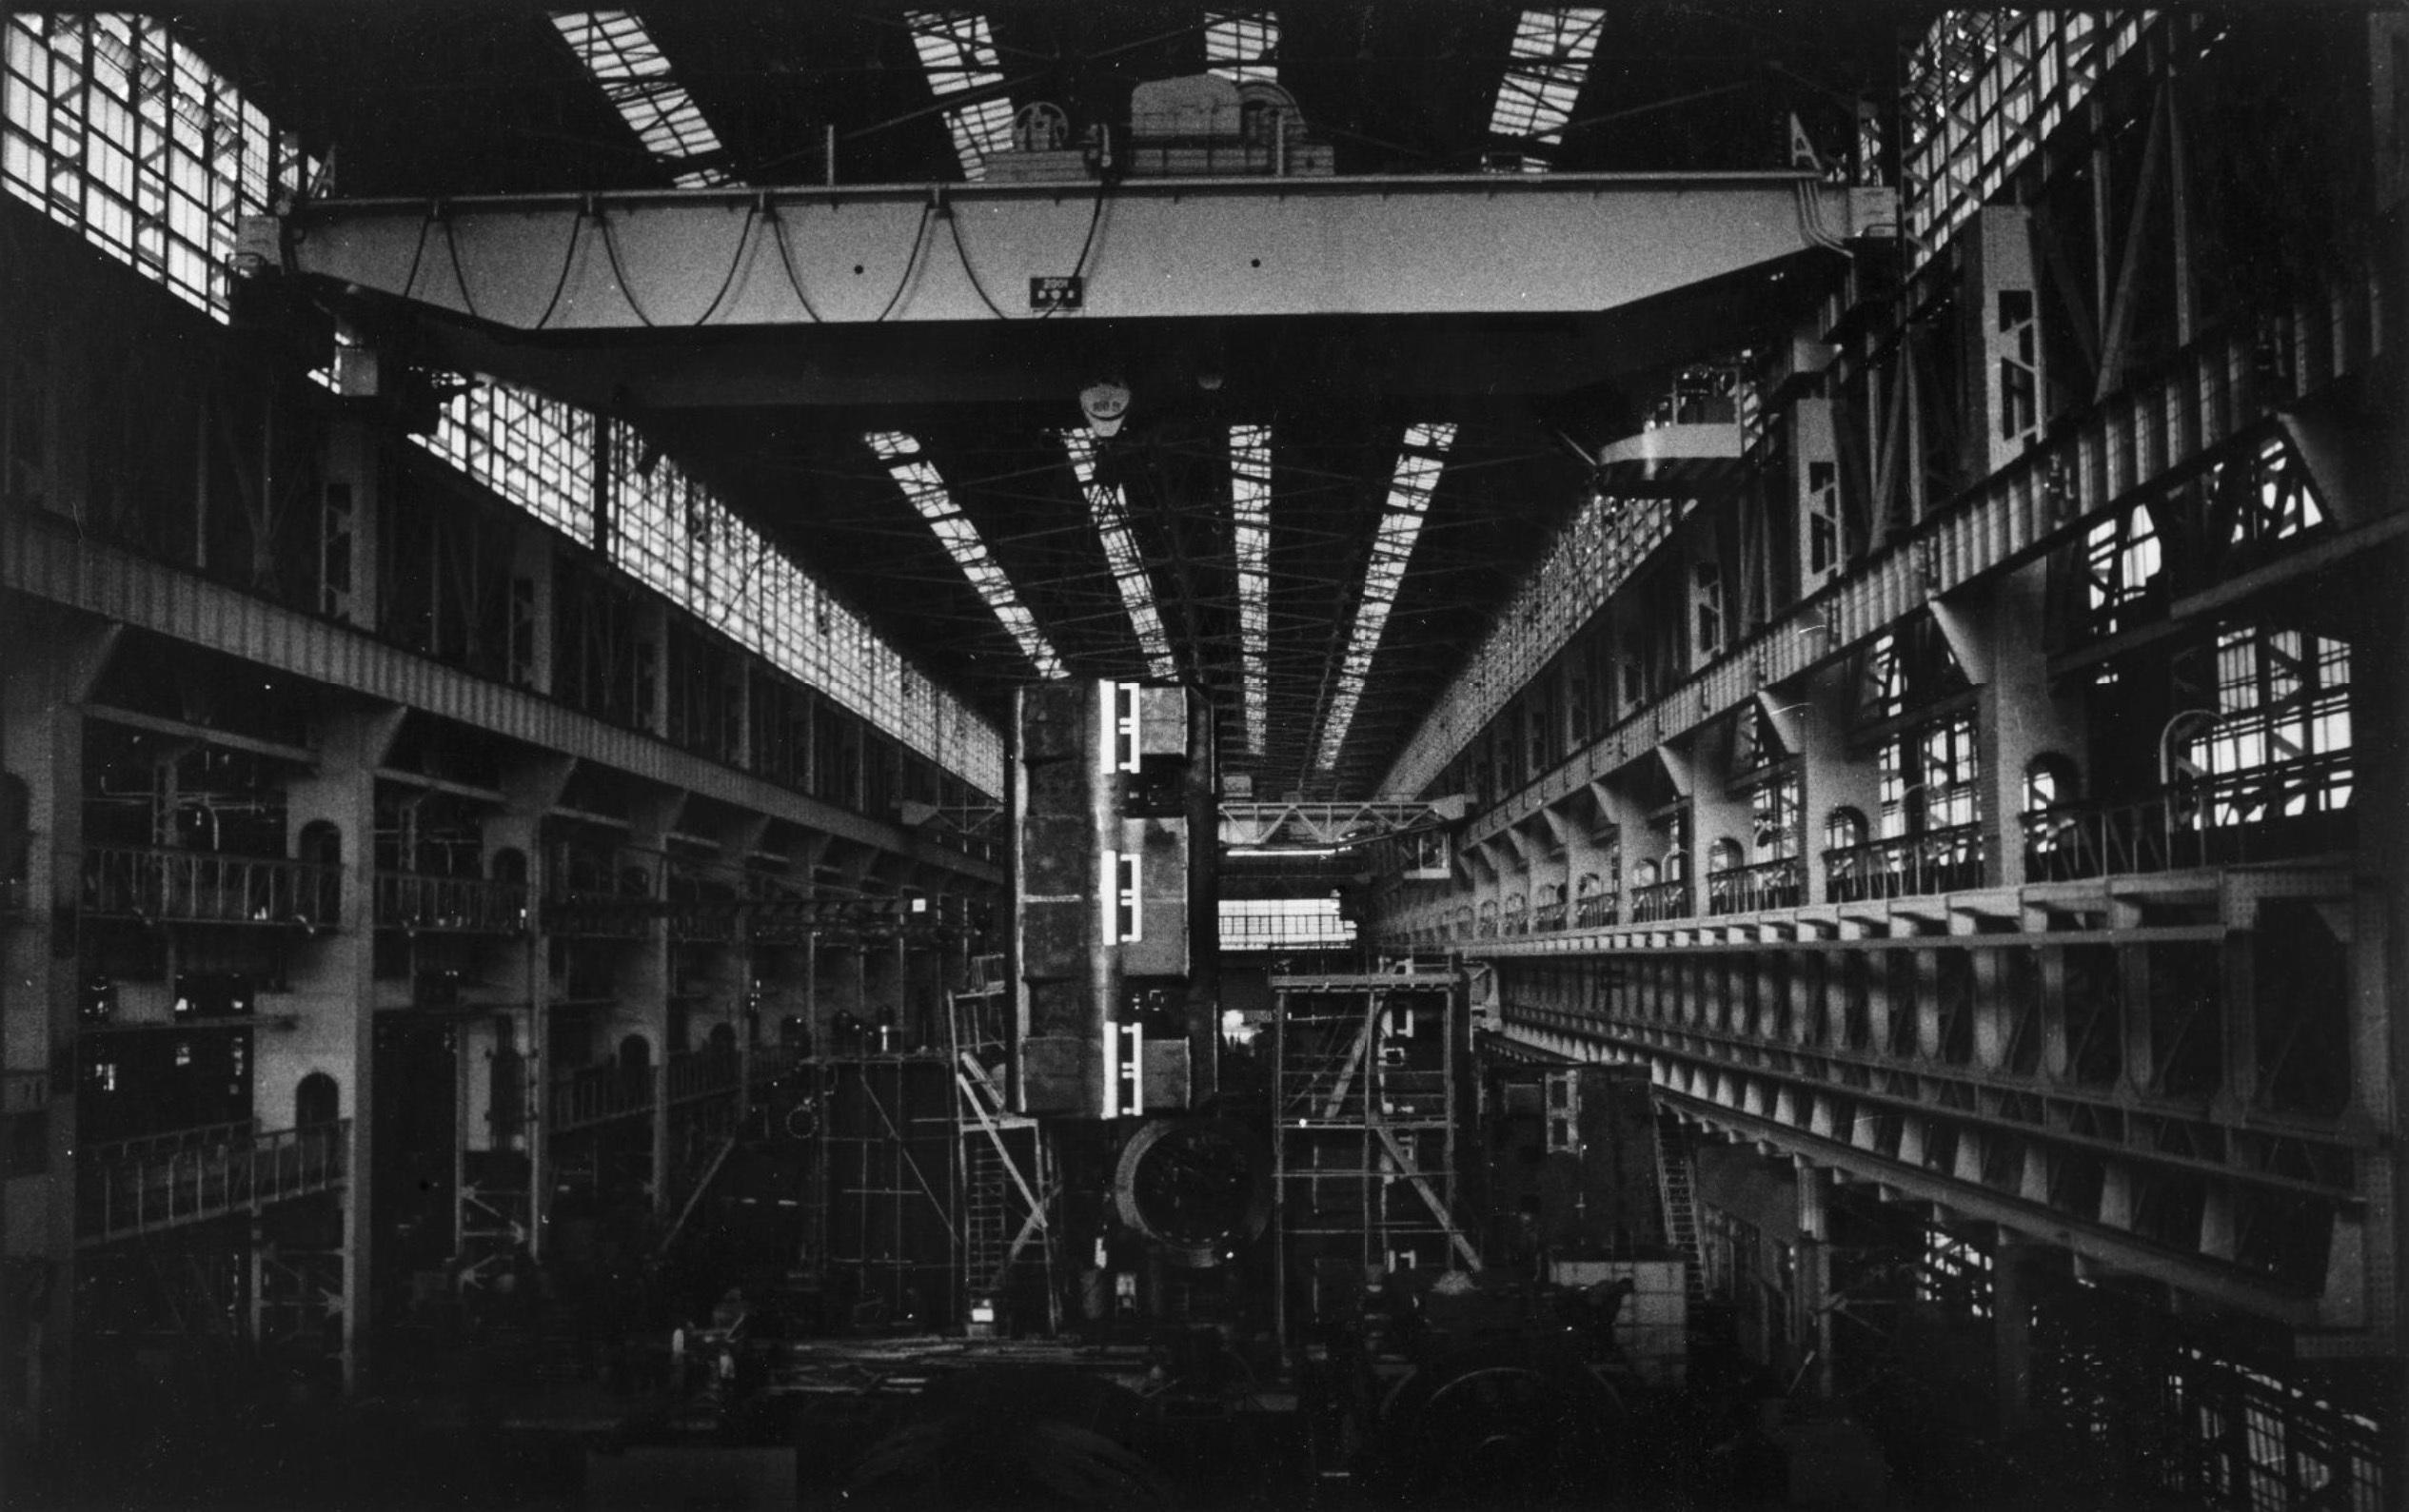 Factory Interior, Japan, 1961-62